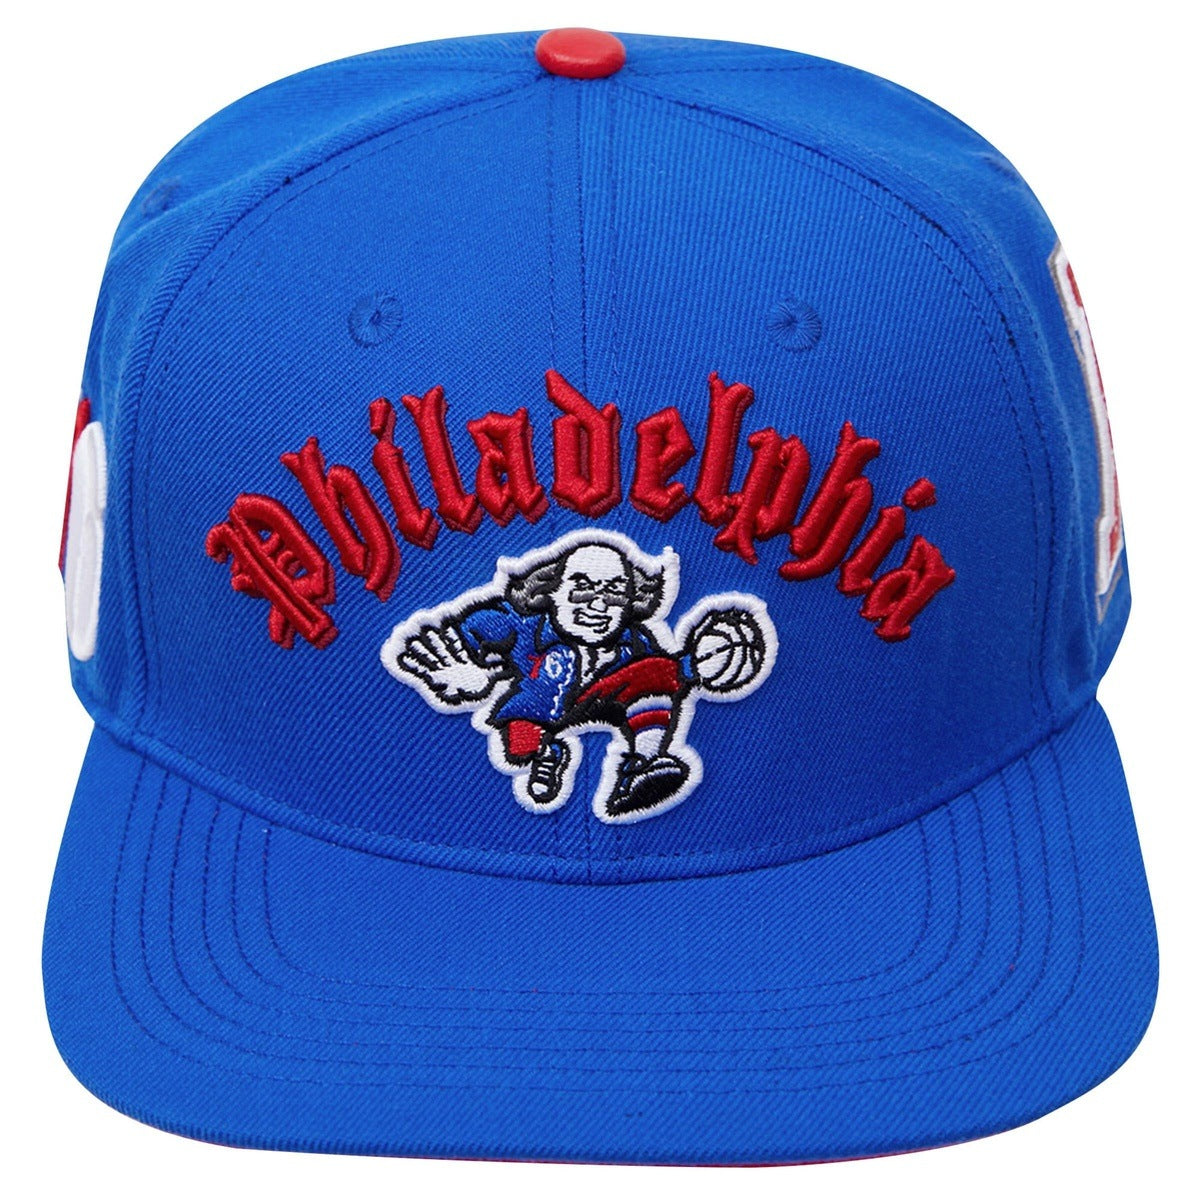 NBA PHILADELPHIA 76ERS OLD ENGLISH UNISEX SNAPBACK HAT (ROYAL BLUE)